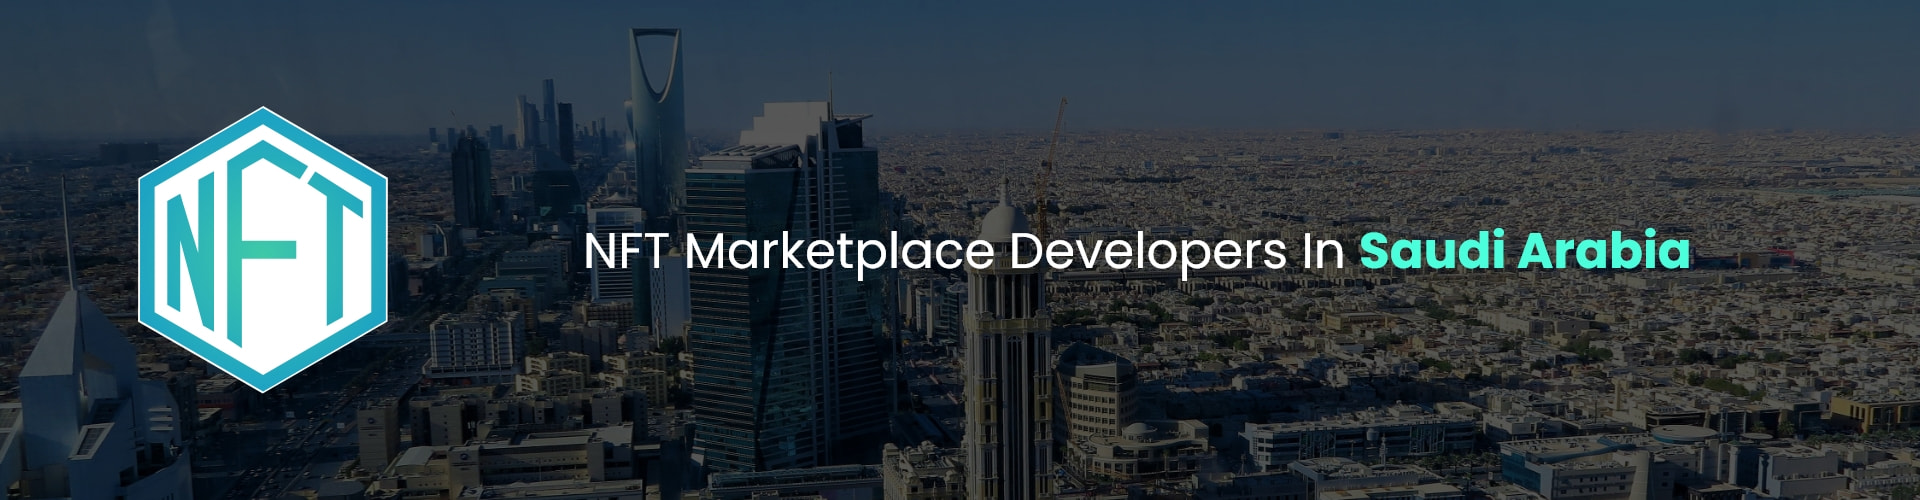 hire nft marketplace developers in Saudi Arabia